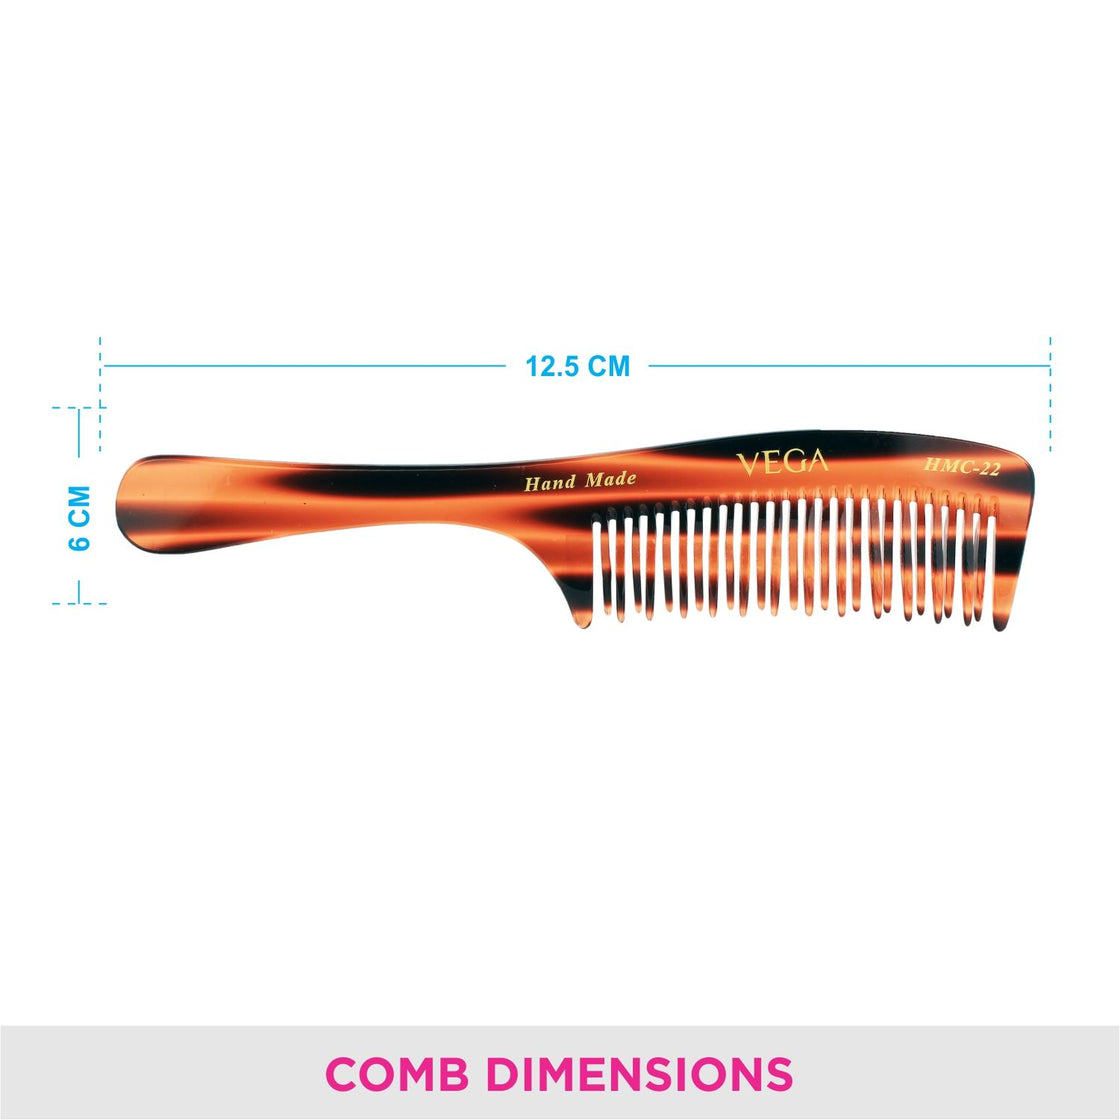 Vega Handcrafted Comb (Hmc-22)-5